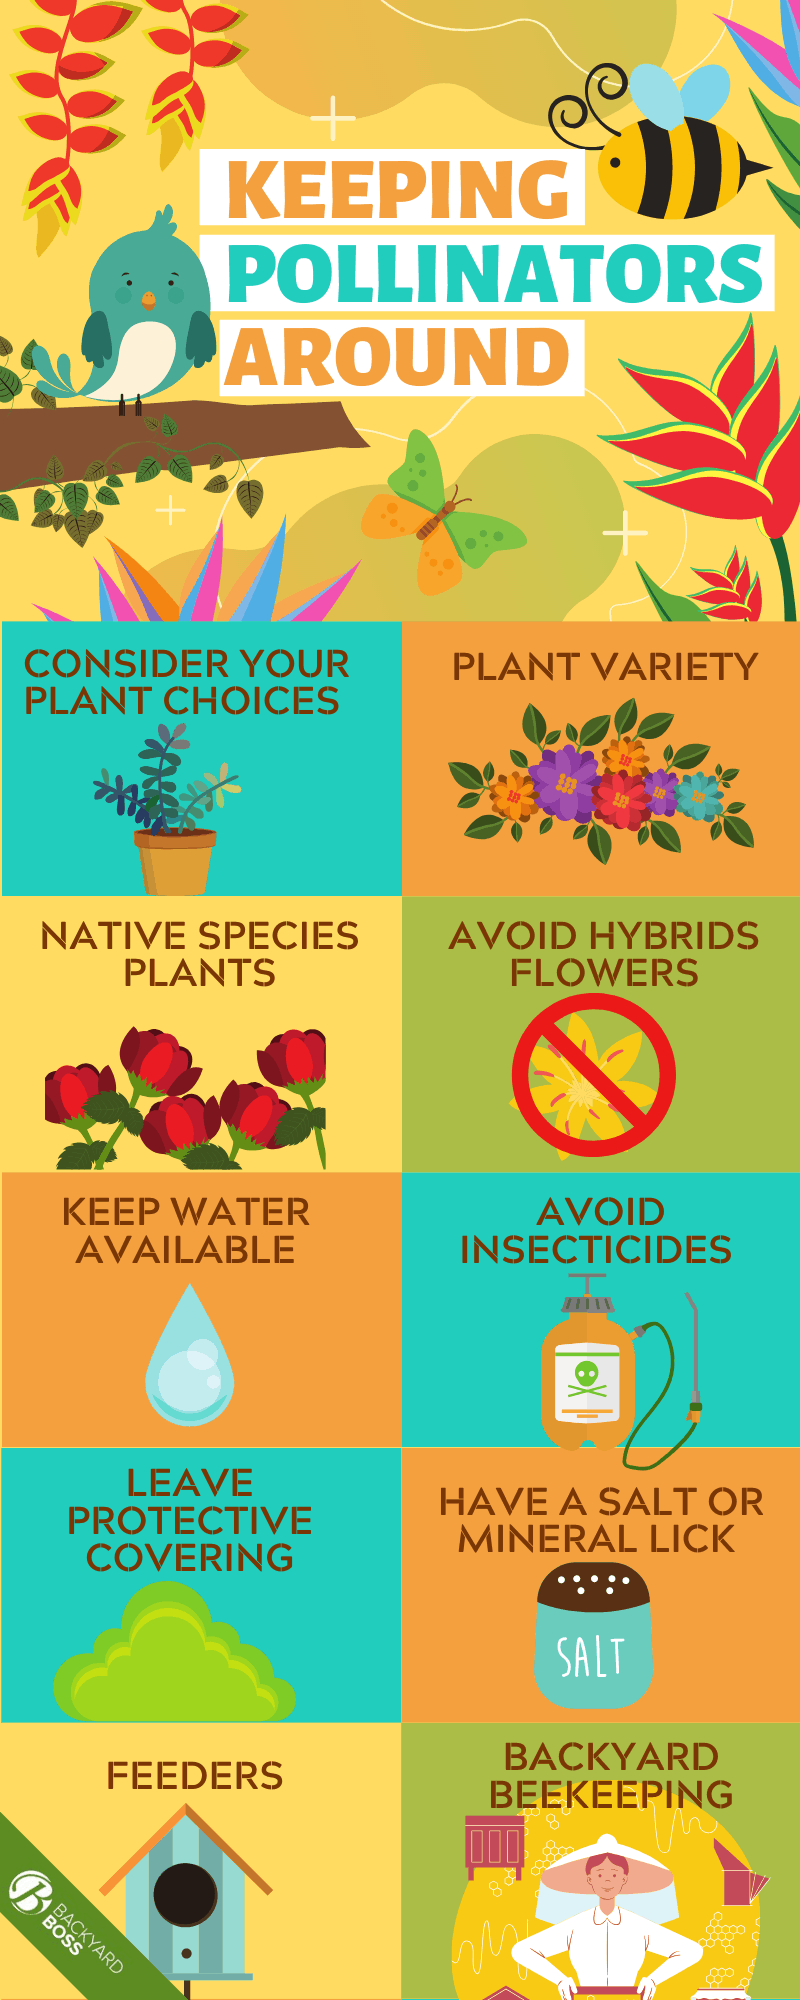 Keeping Pollinators Around - Infographic